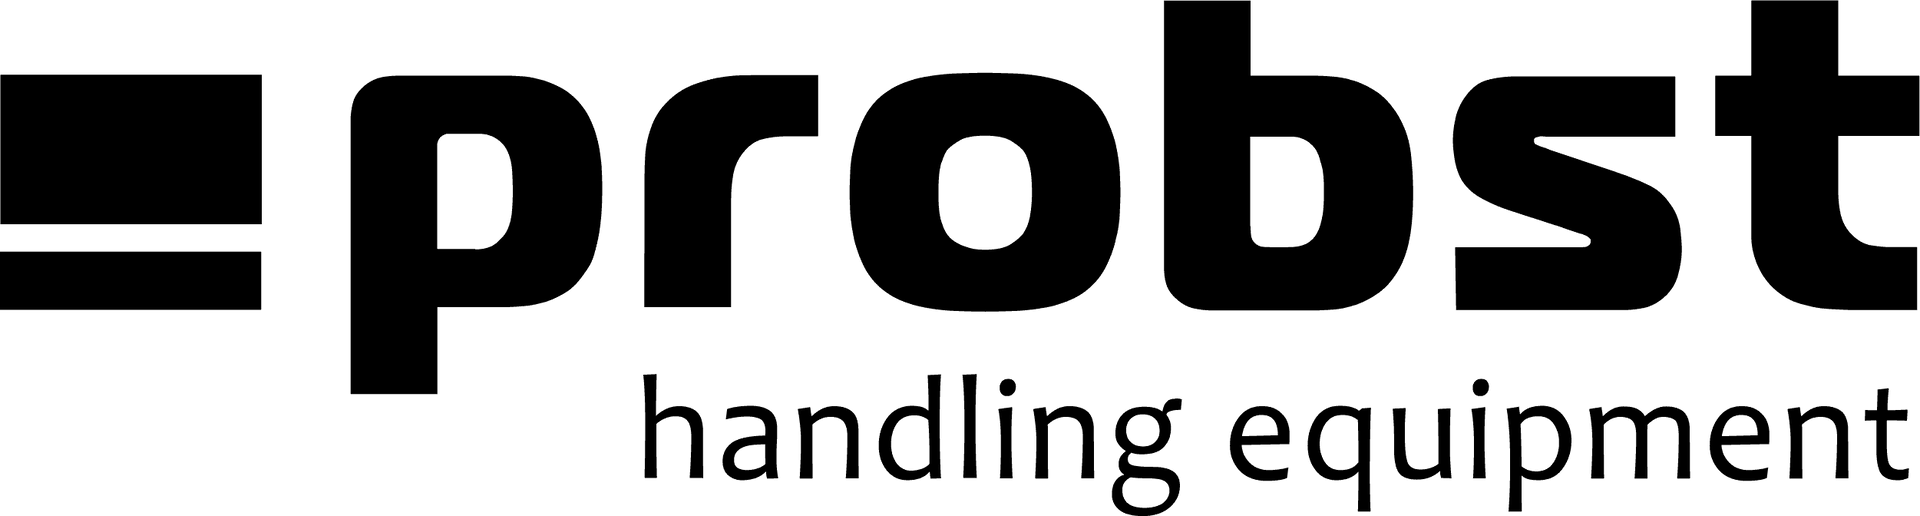 Probst dark logo